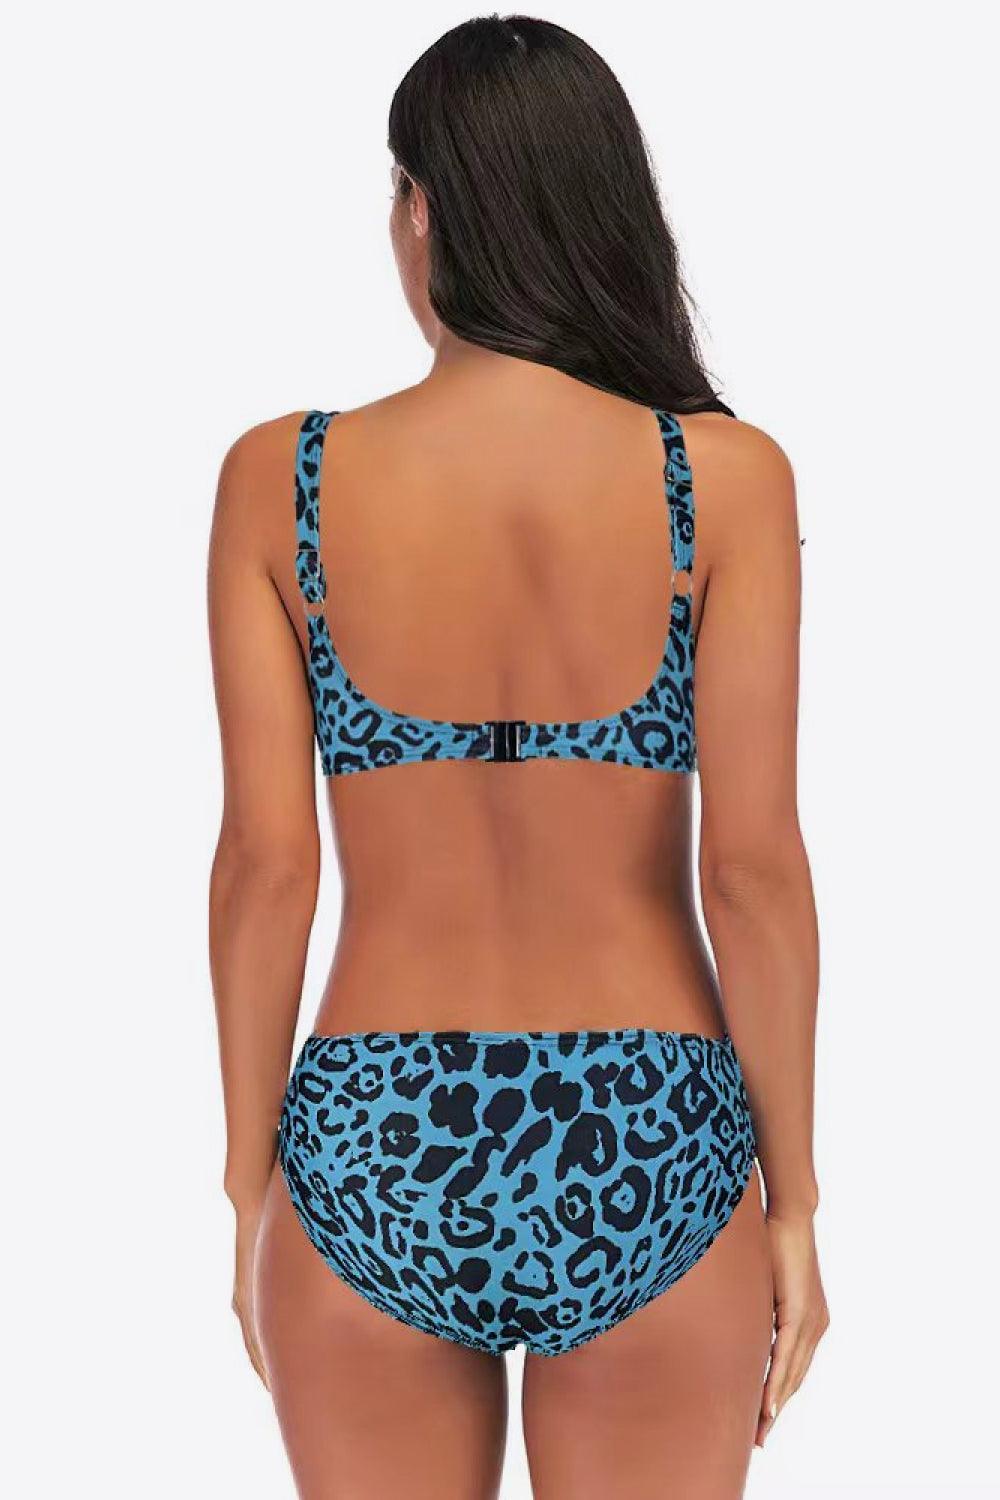 Summer Essence Mid-Waist Leopard Bikini Set - MXSTUDIO.COM